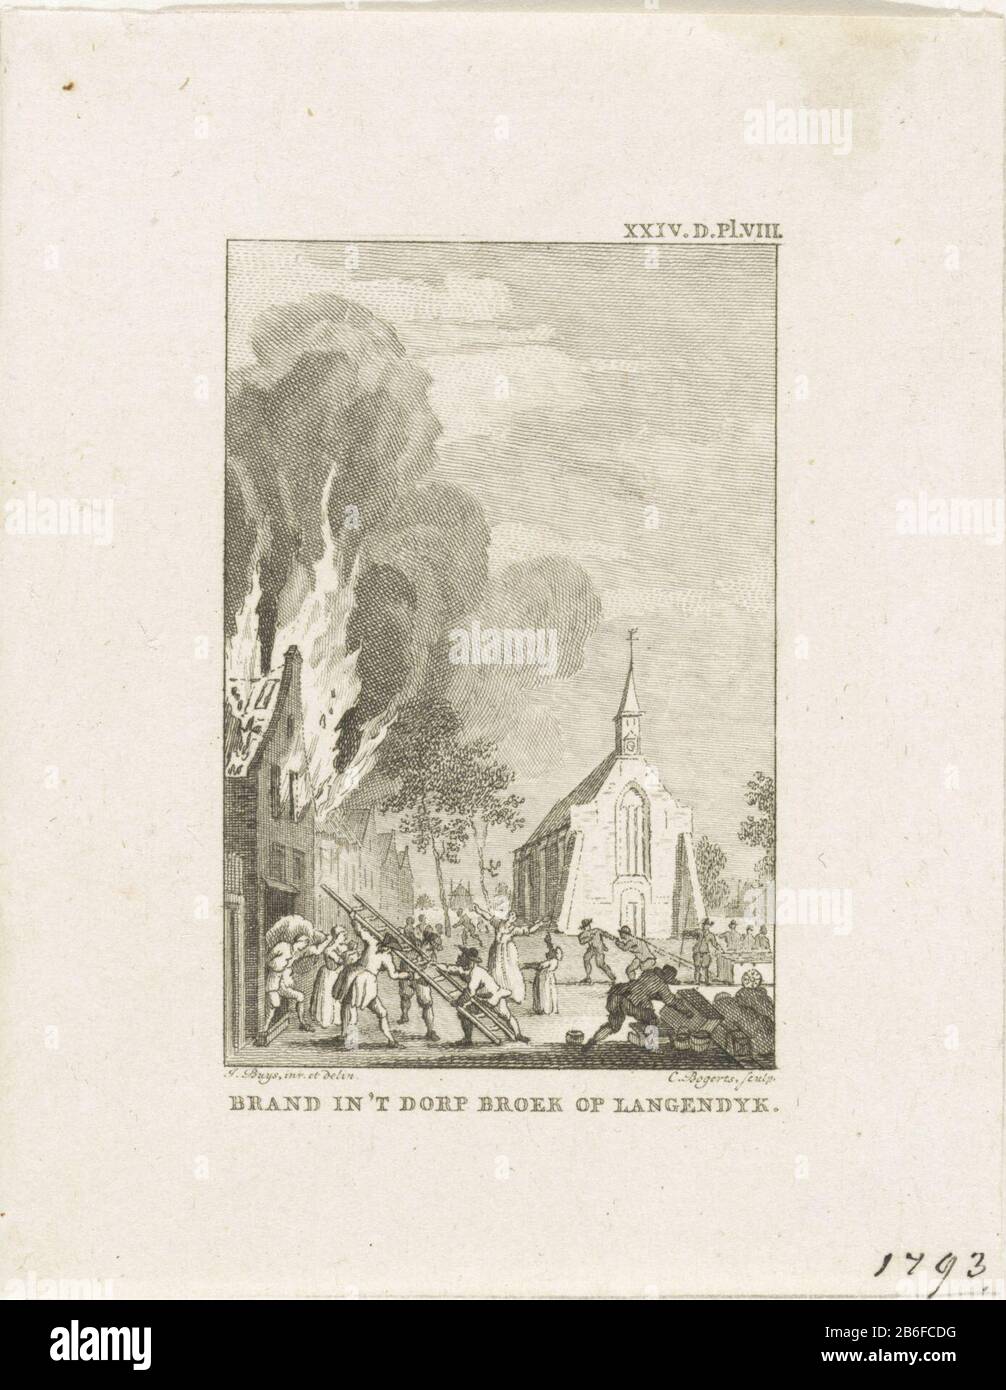 Fire in Broek op Langedijk, 1793 fire in the village Broek Langendyk (title  object) Fire in Broek op Langedijk, april 11, 1793. Signed right: XXIV.D.Pl.VIII.  Manufacturer : printmaker Cornelis Bogerts (listed building)